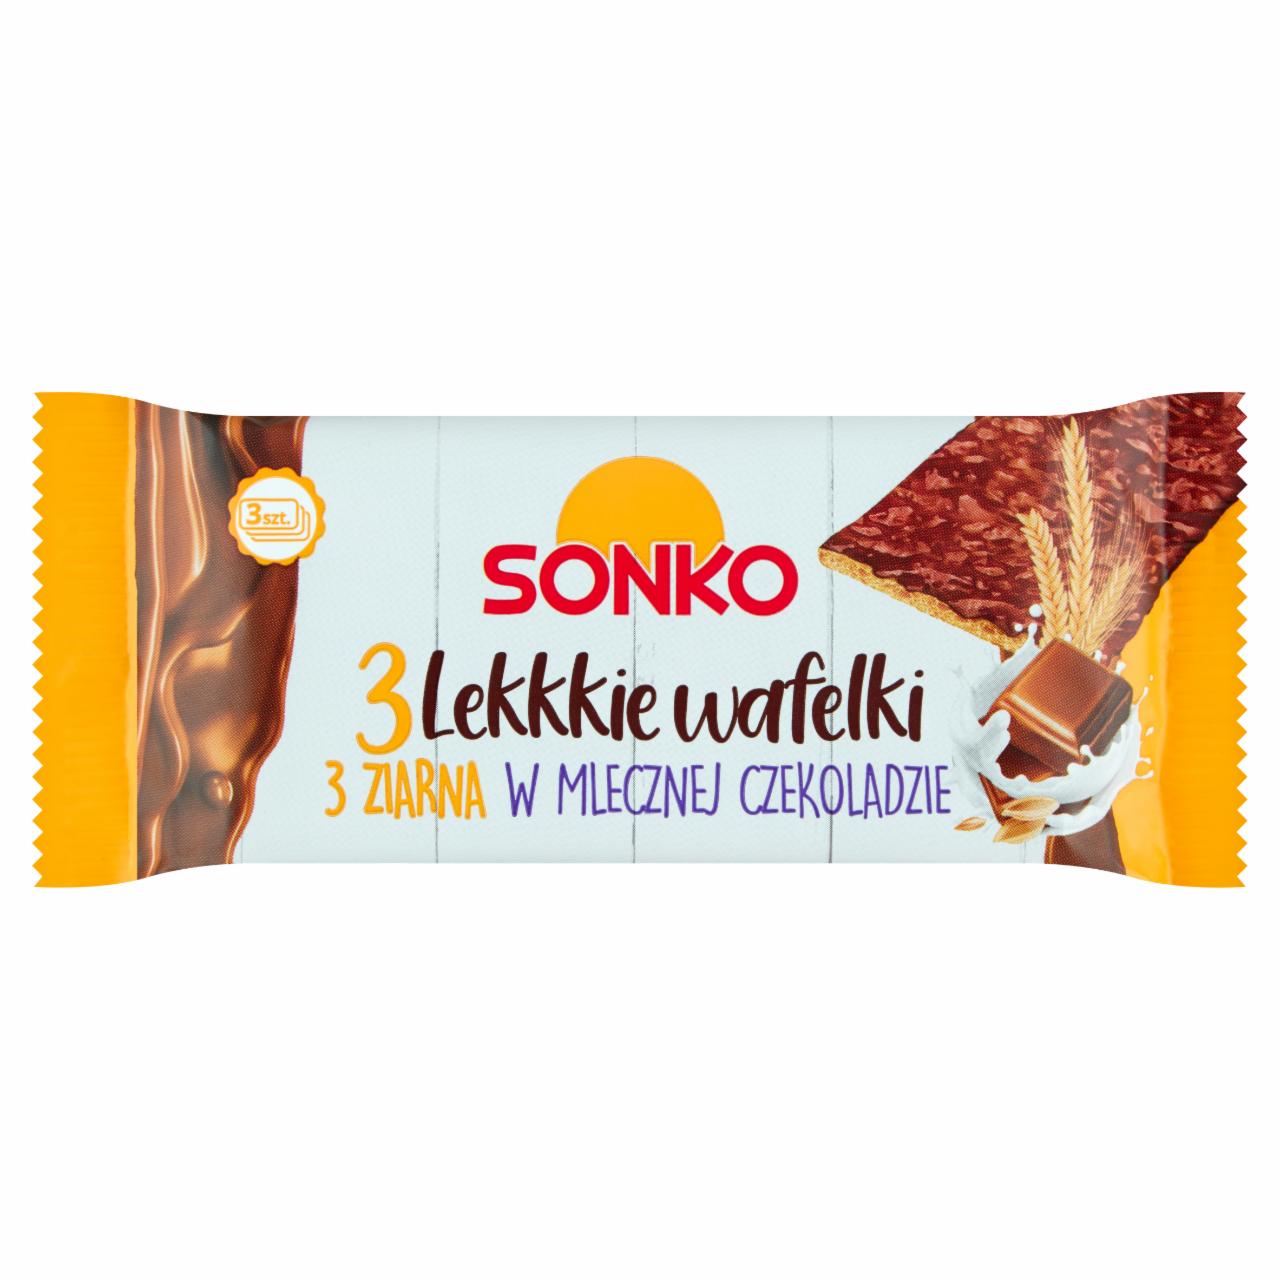 Фото - Вафли 3 зерна в молочном шоколаде 3Lekkkie wafelki Sonko